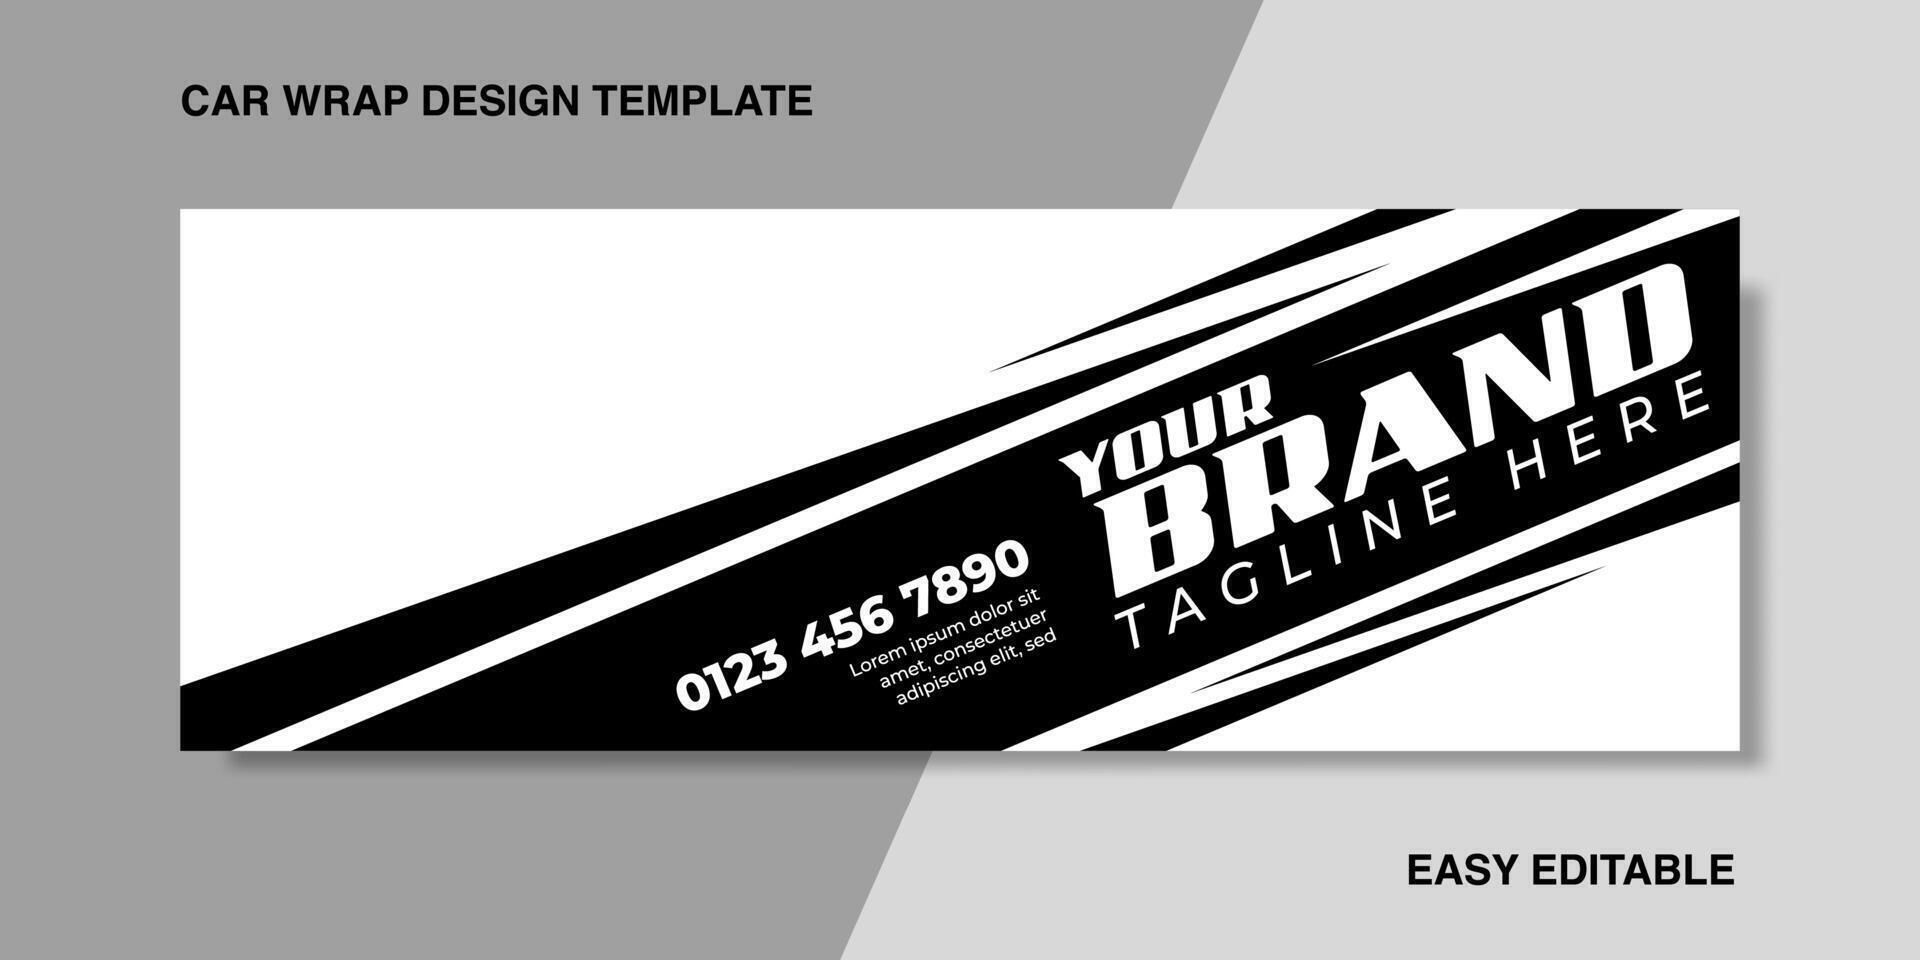 zwart wit busje auto inpakken ontwerp omhulsel sticker en sticker ontwerp voor zakelijke bedrijf branding vector